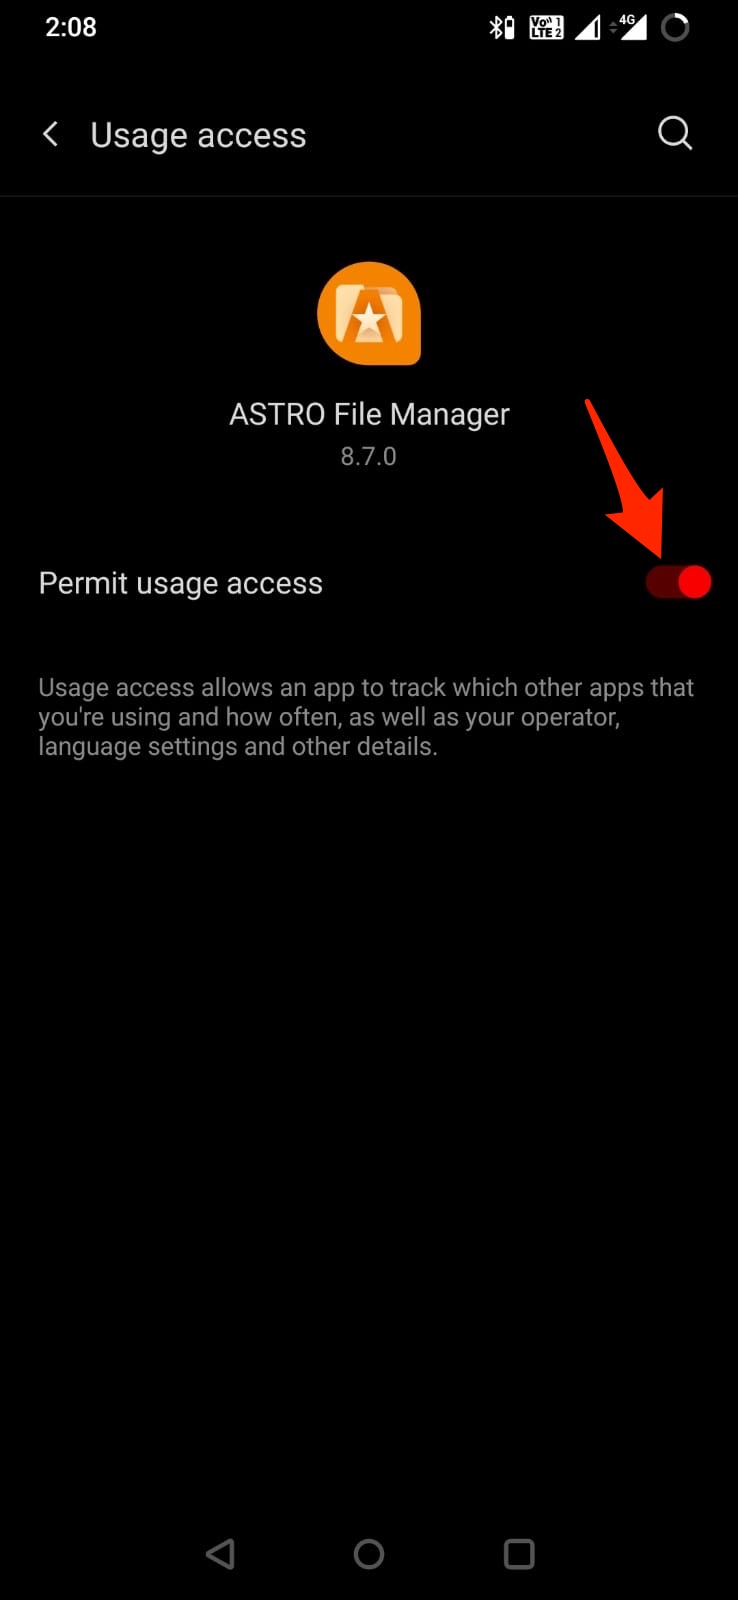 Permit Usage Access